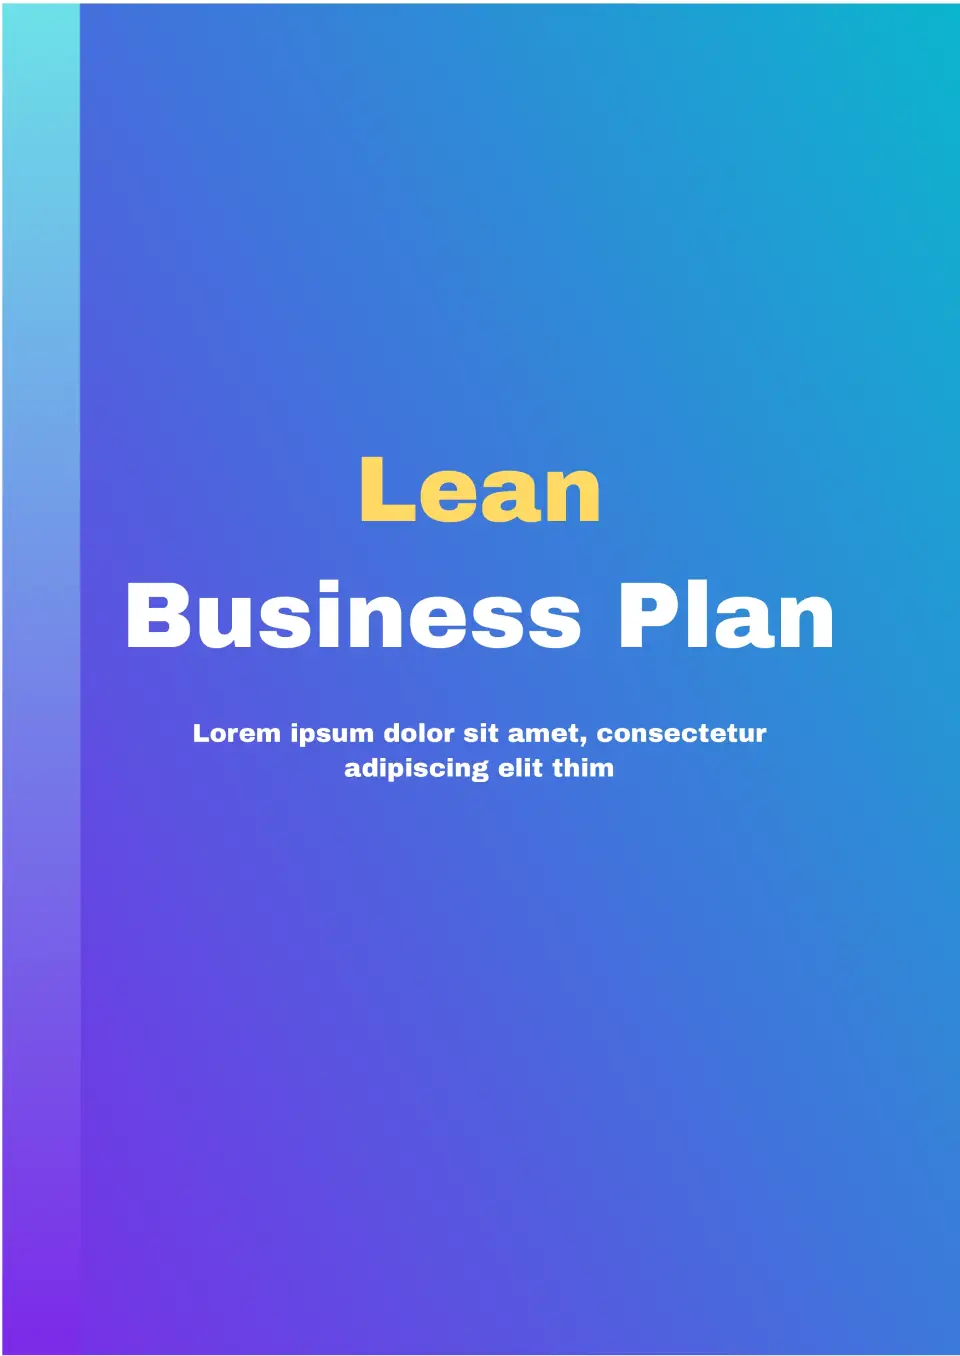 Lean Business Plan Template for Google Docs